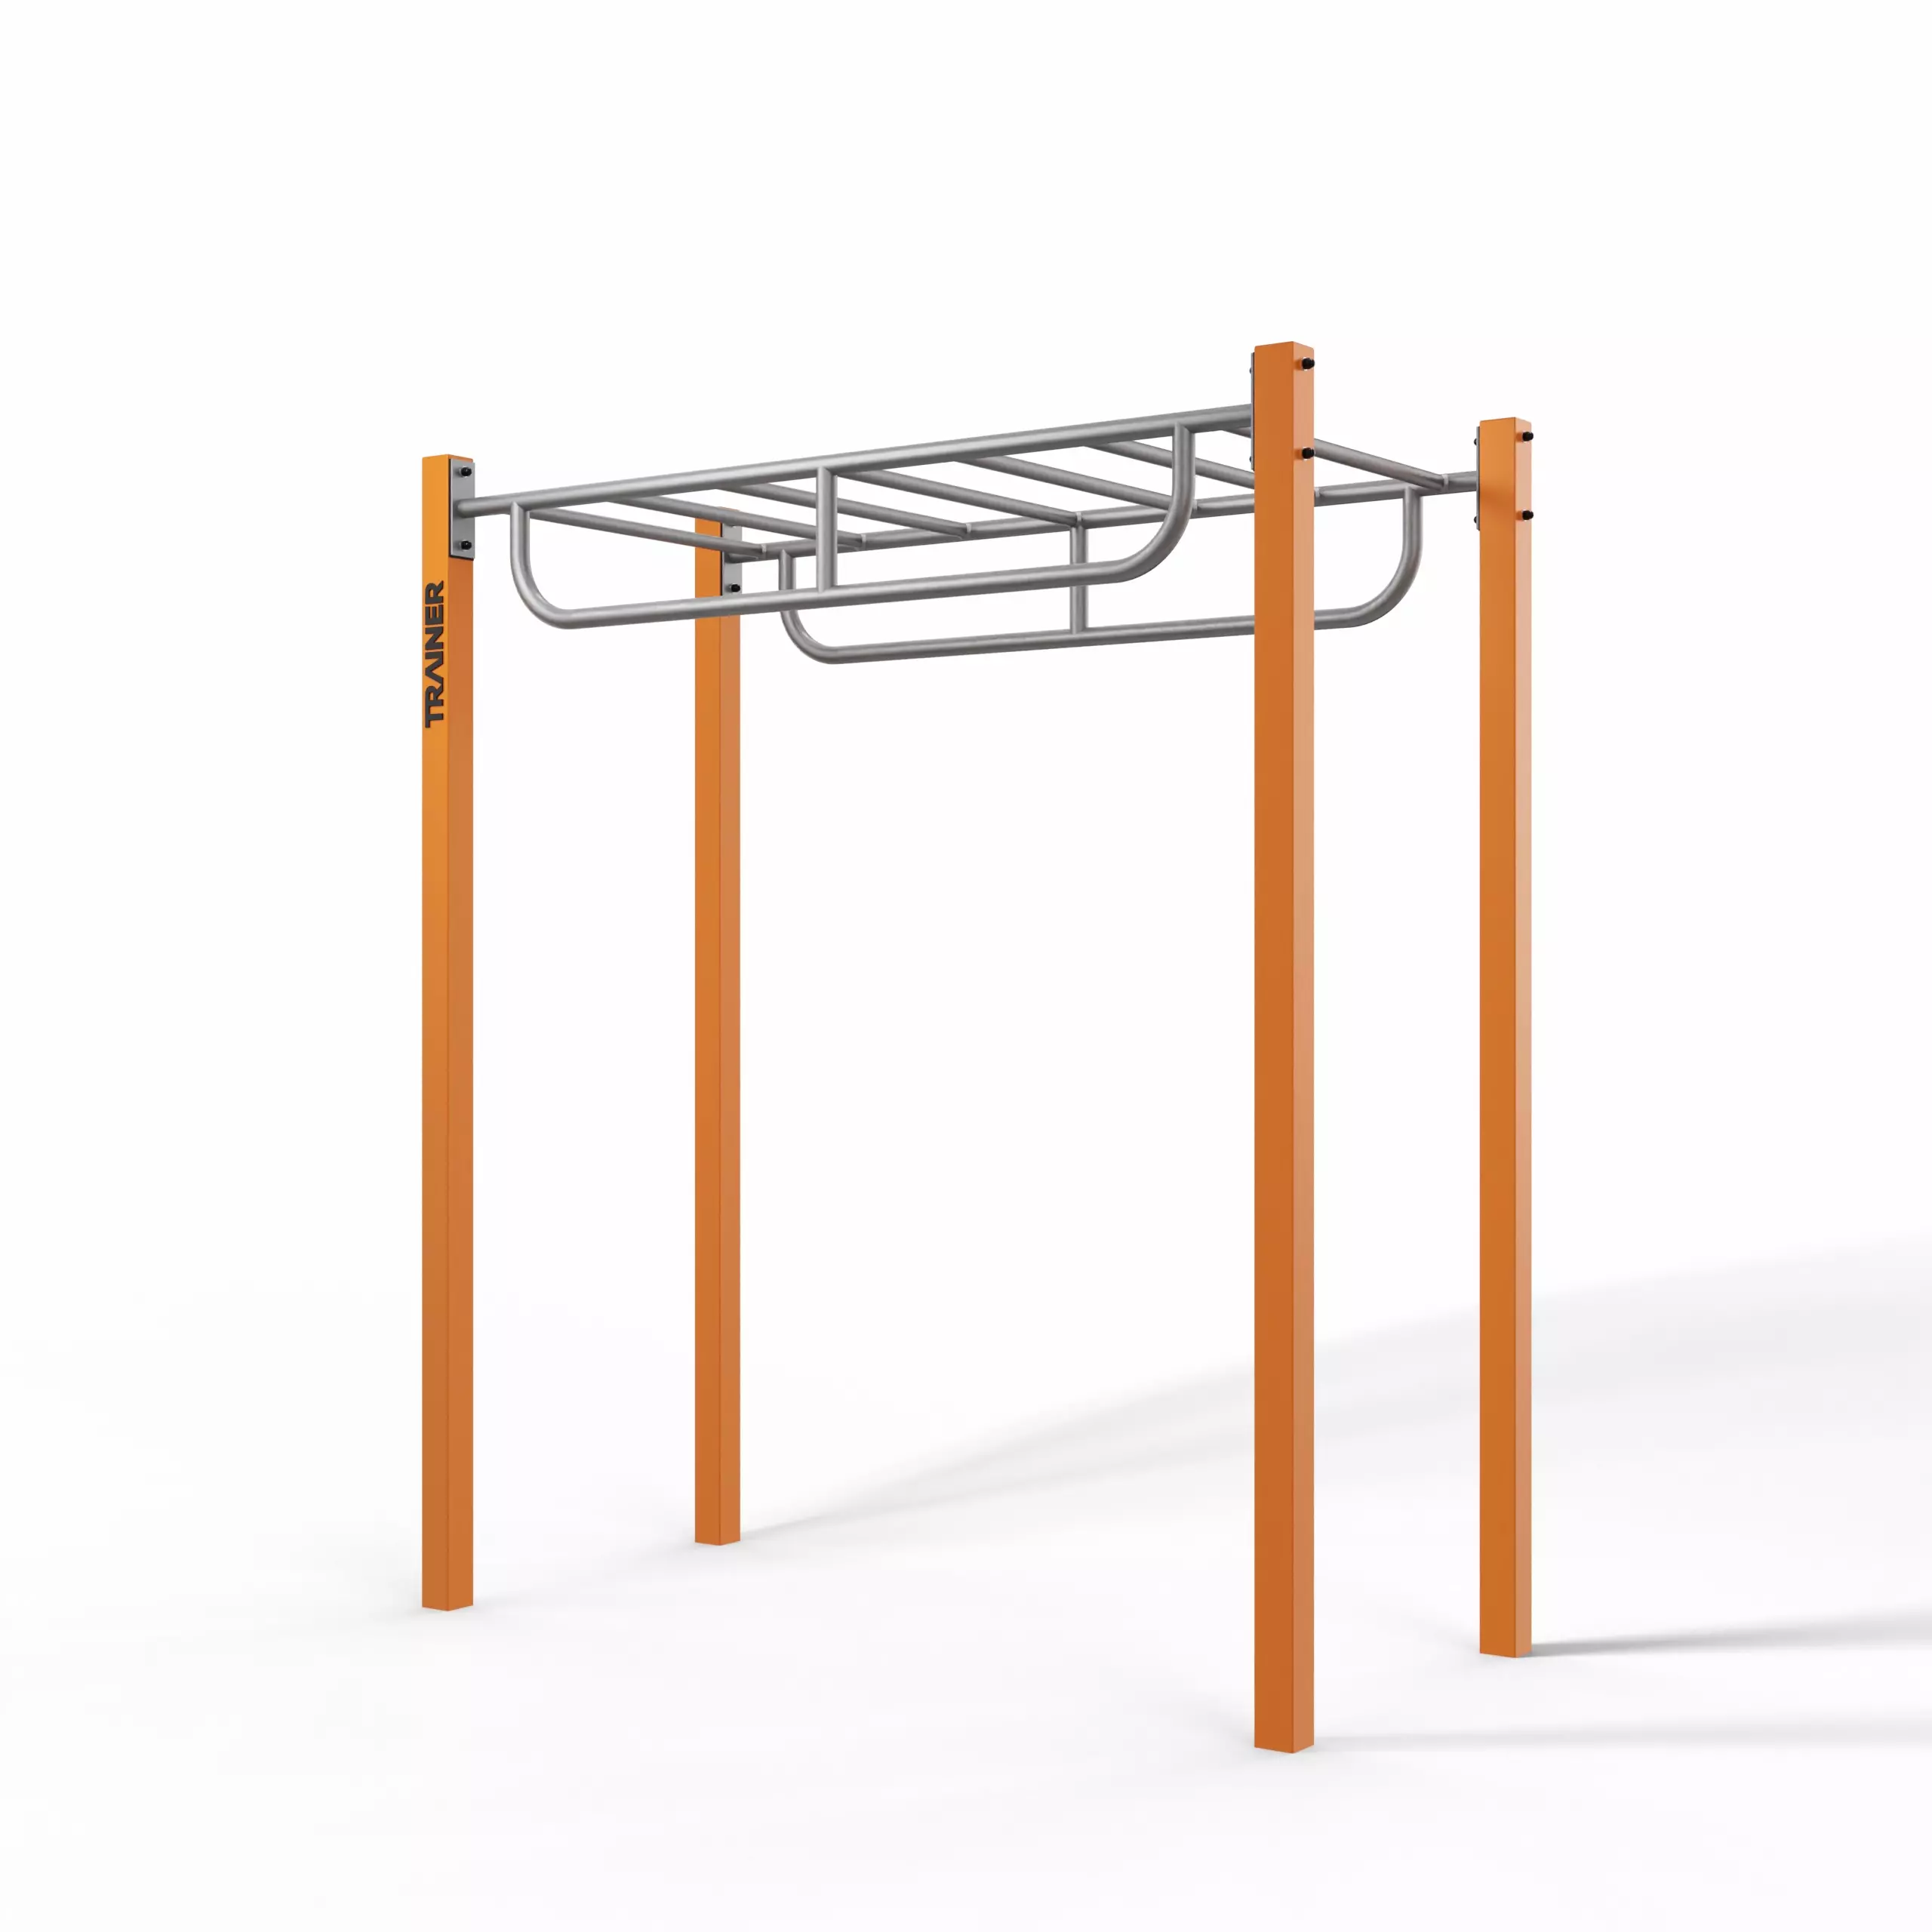 https://outdoor-gym.com/wp-content/uploads/street-workout-horizontal-ladder-with-handles-trainer.webp